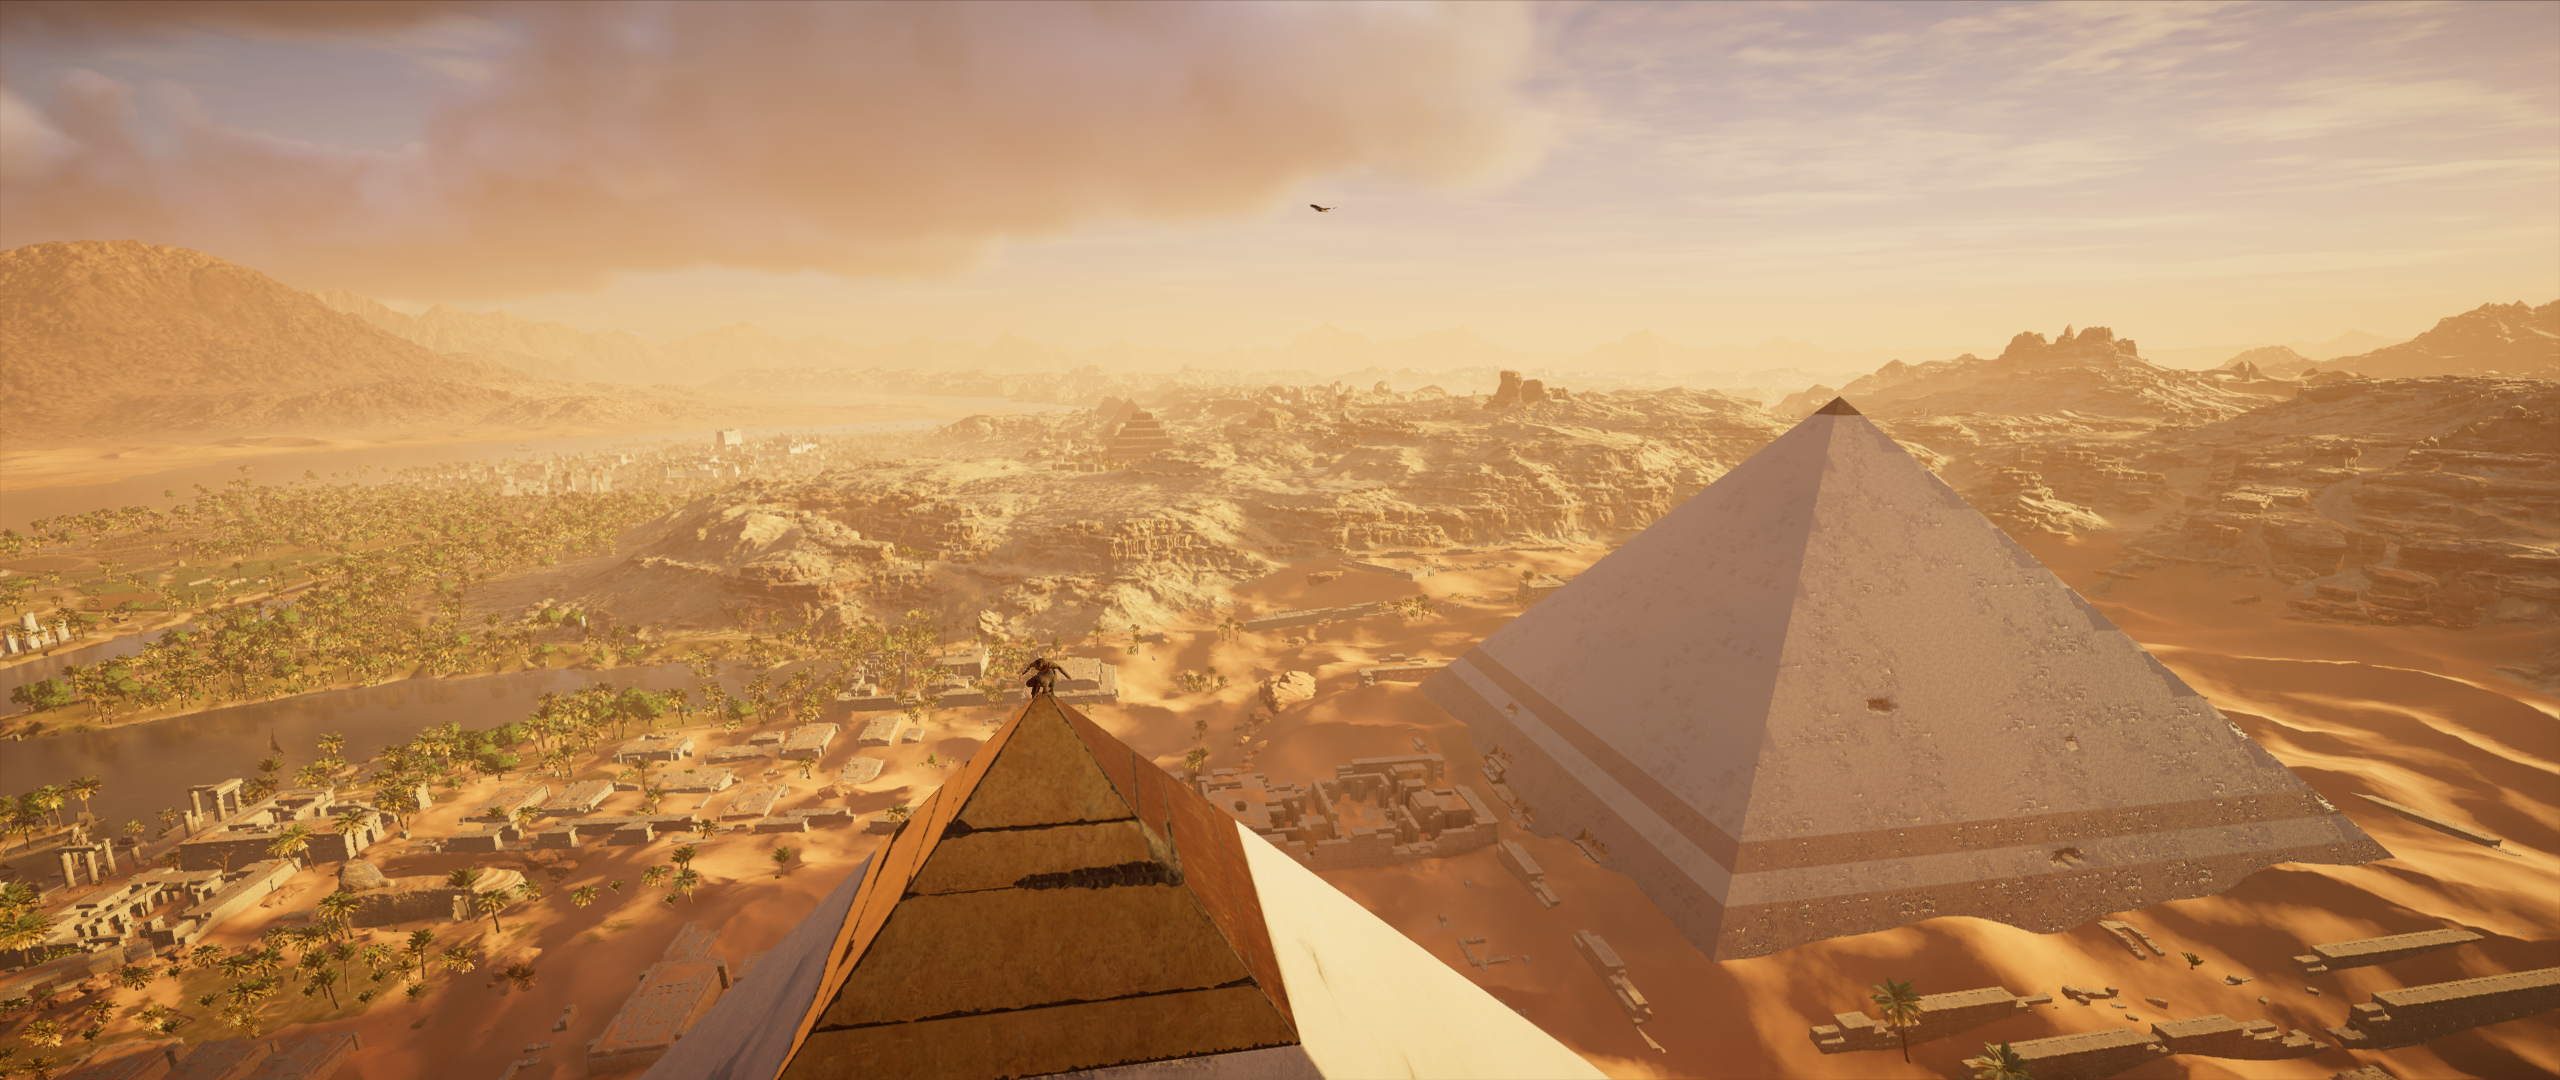 Assassins Creed Origins Pyramids Of Giza Egypt Bayek Landscape 2560x1080